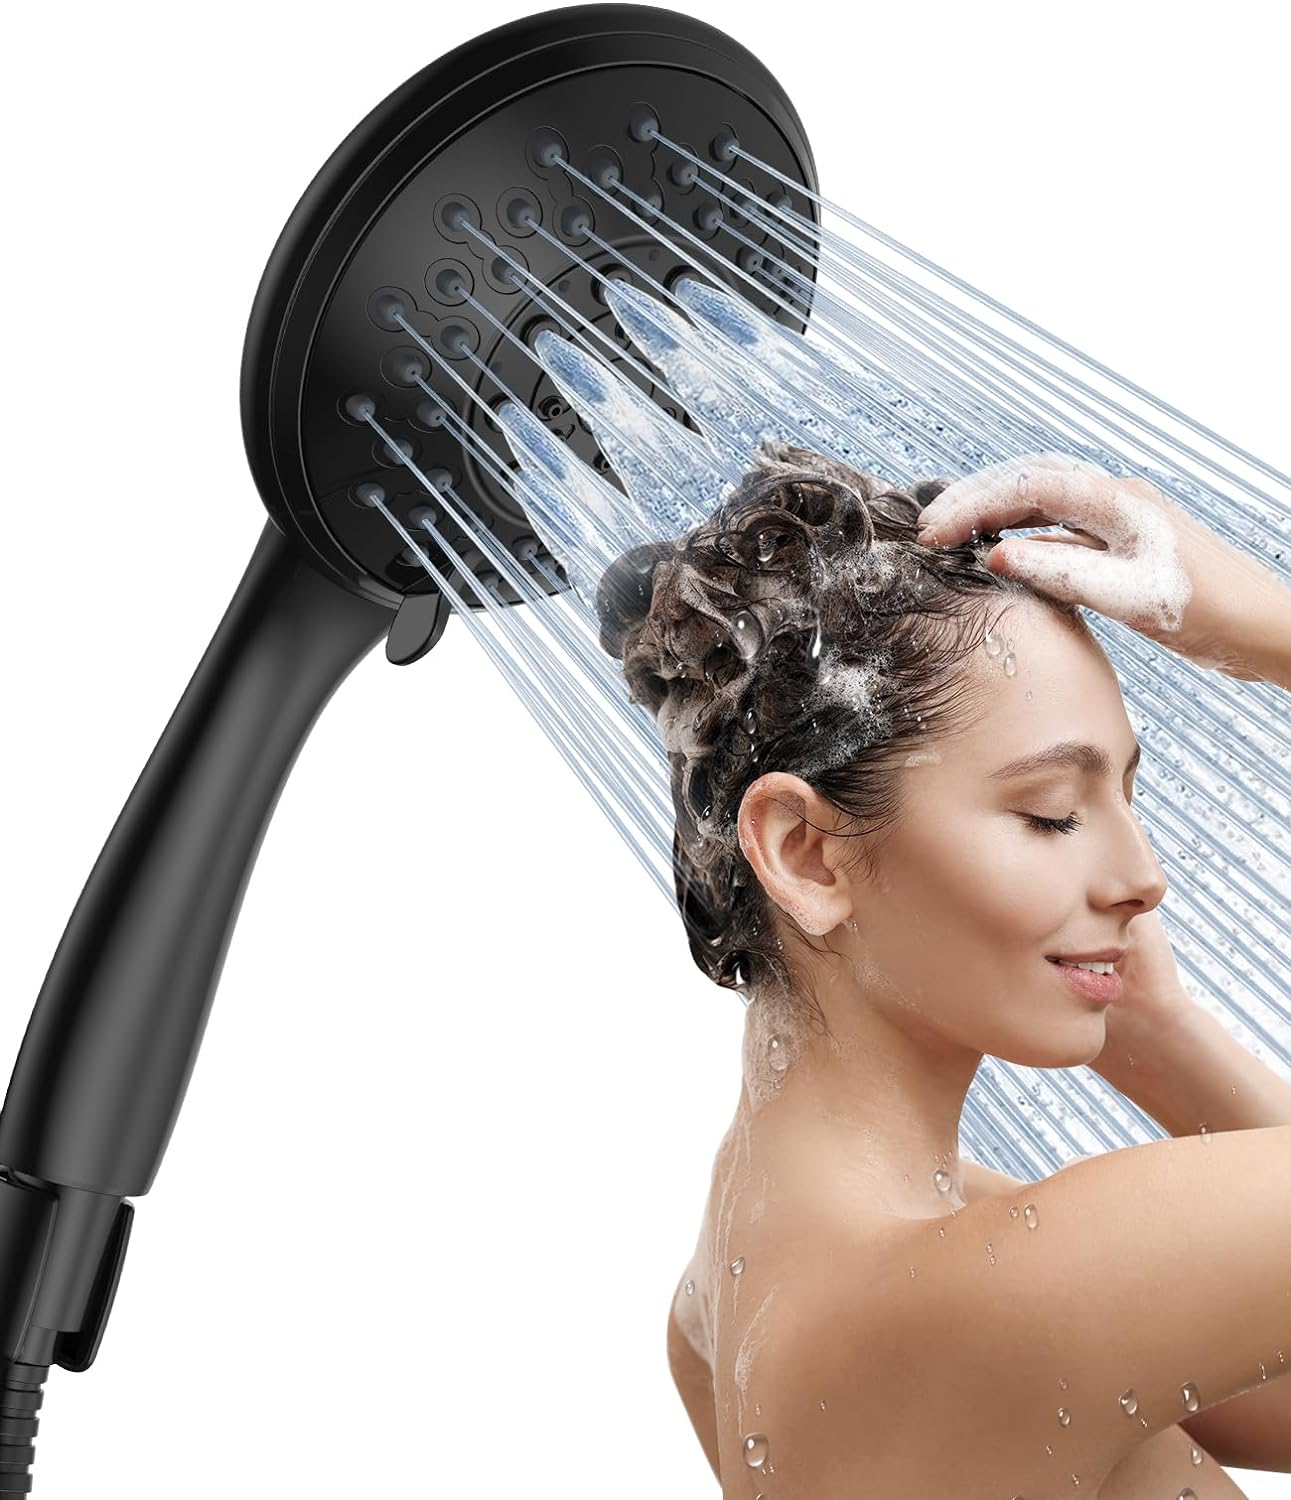 RAINVISTA High Pressure Handheld Shower Head - Matte Black - 6 Functions Detachable Bathroom Shower Head Set with Stainless Steel Hose and Adjustable Shower Arm Bracket